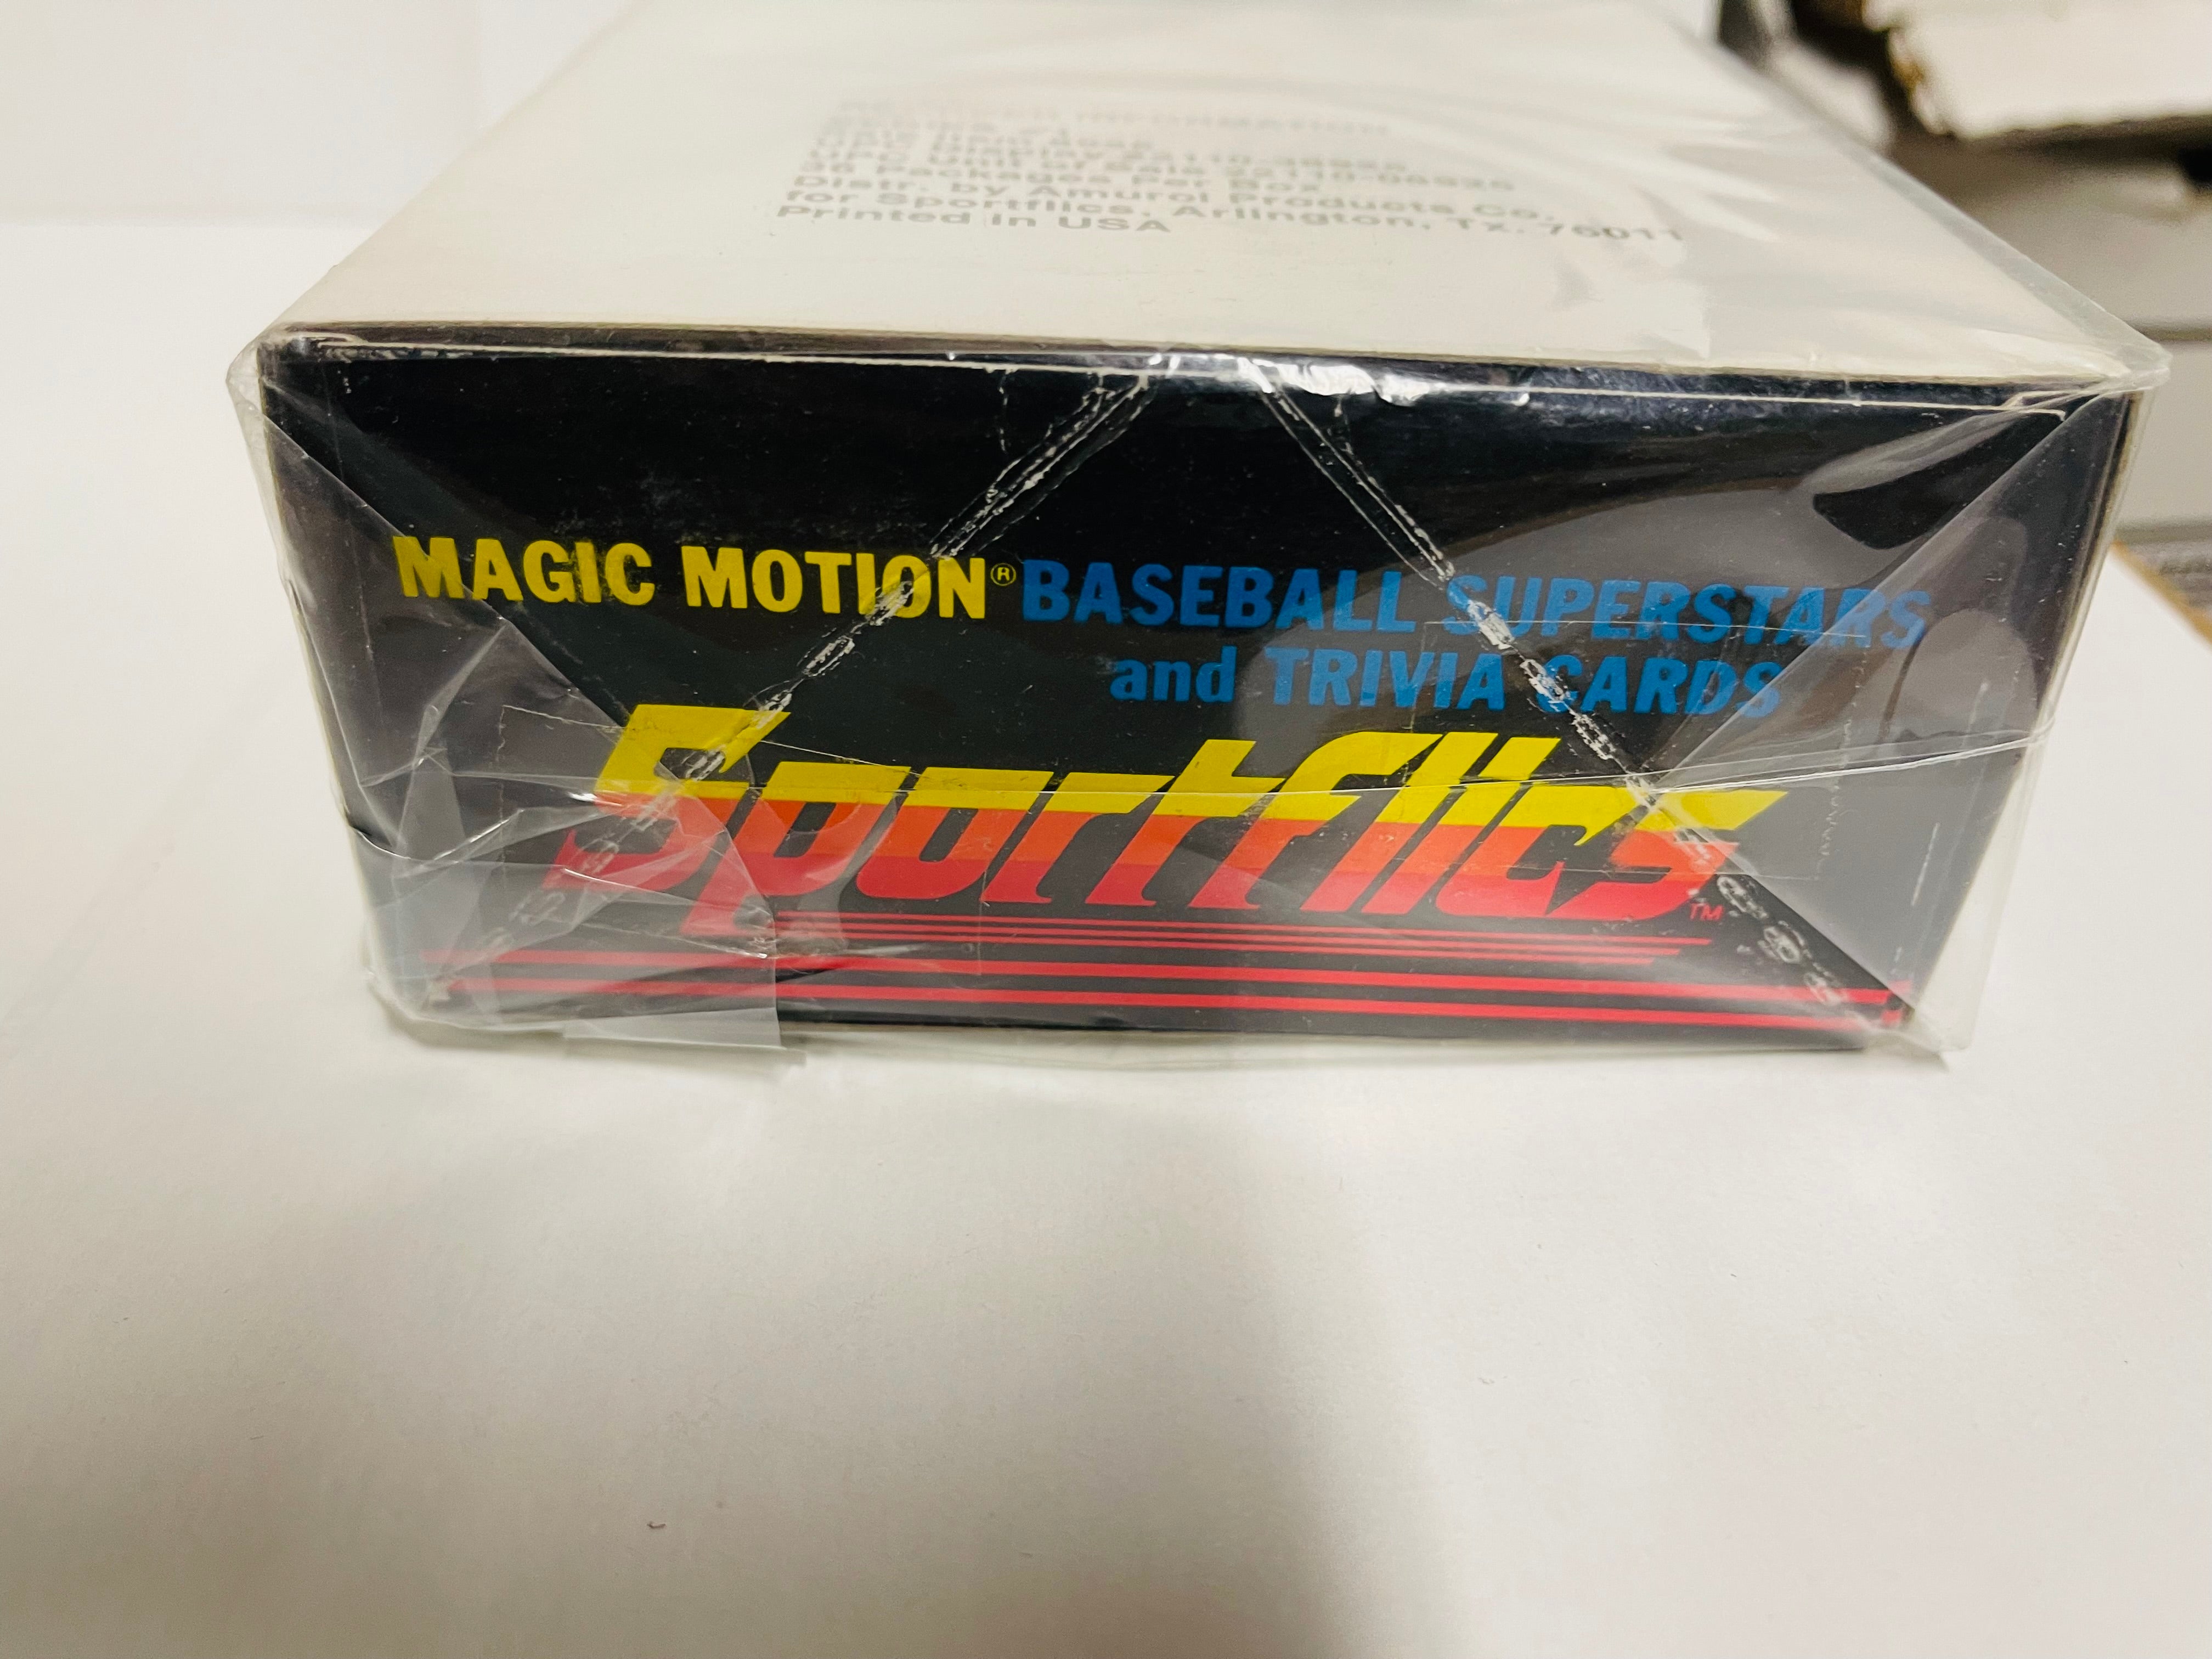 1986 Sportsflics baseball cards 36 packs factory sealed box